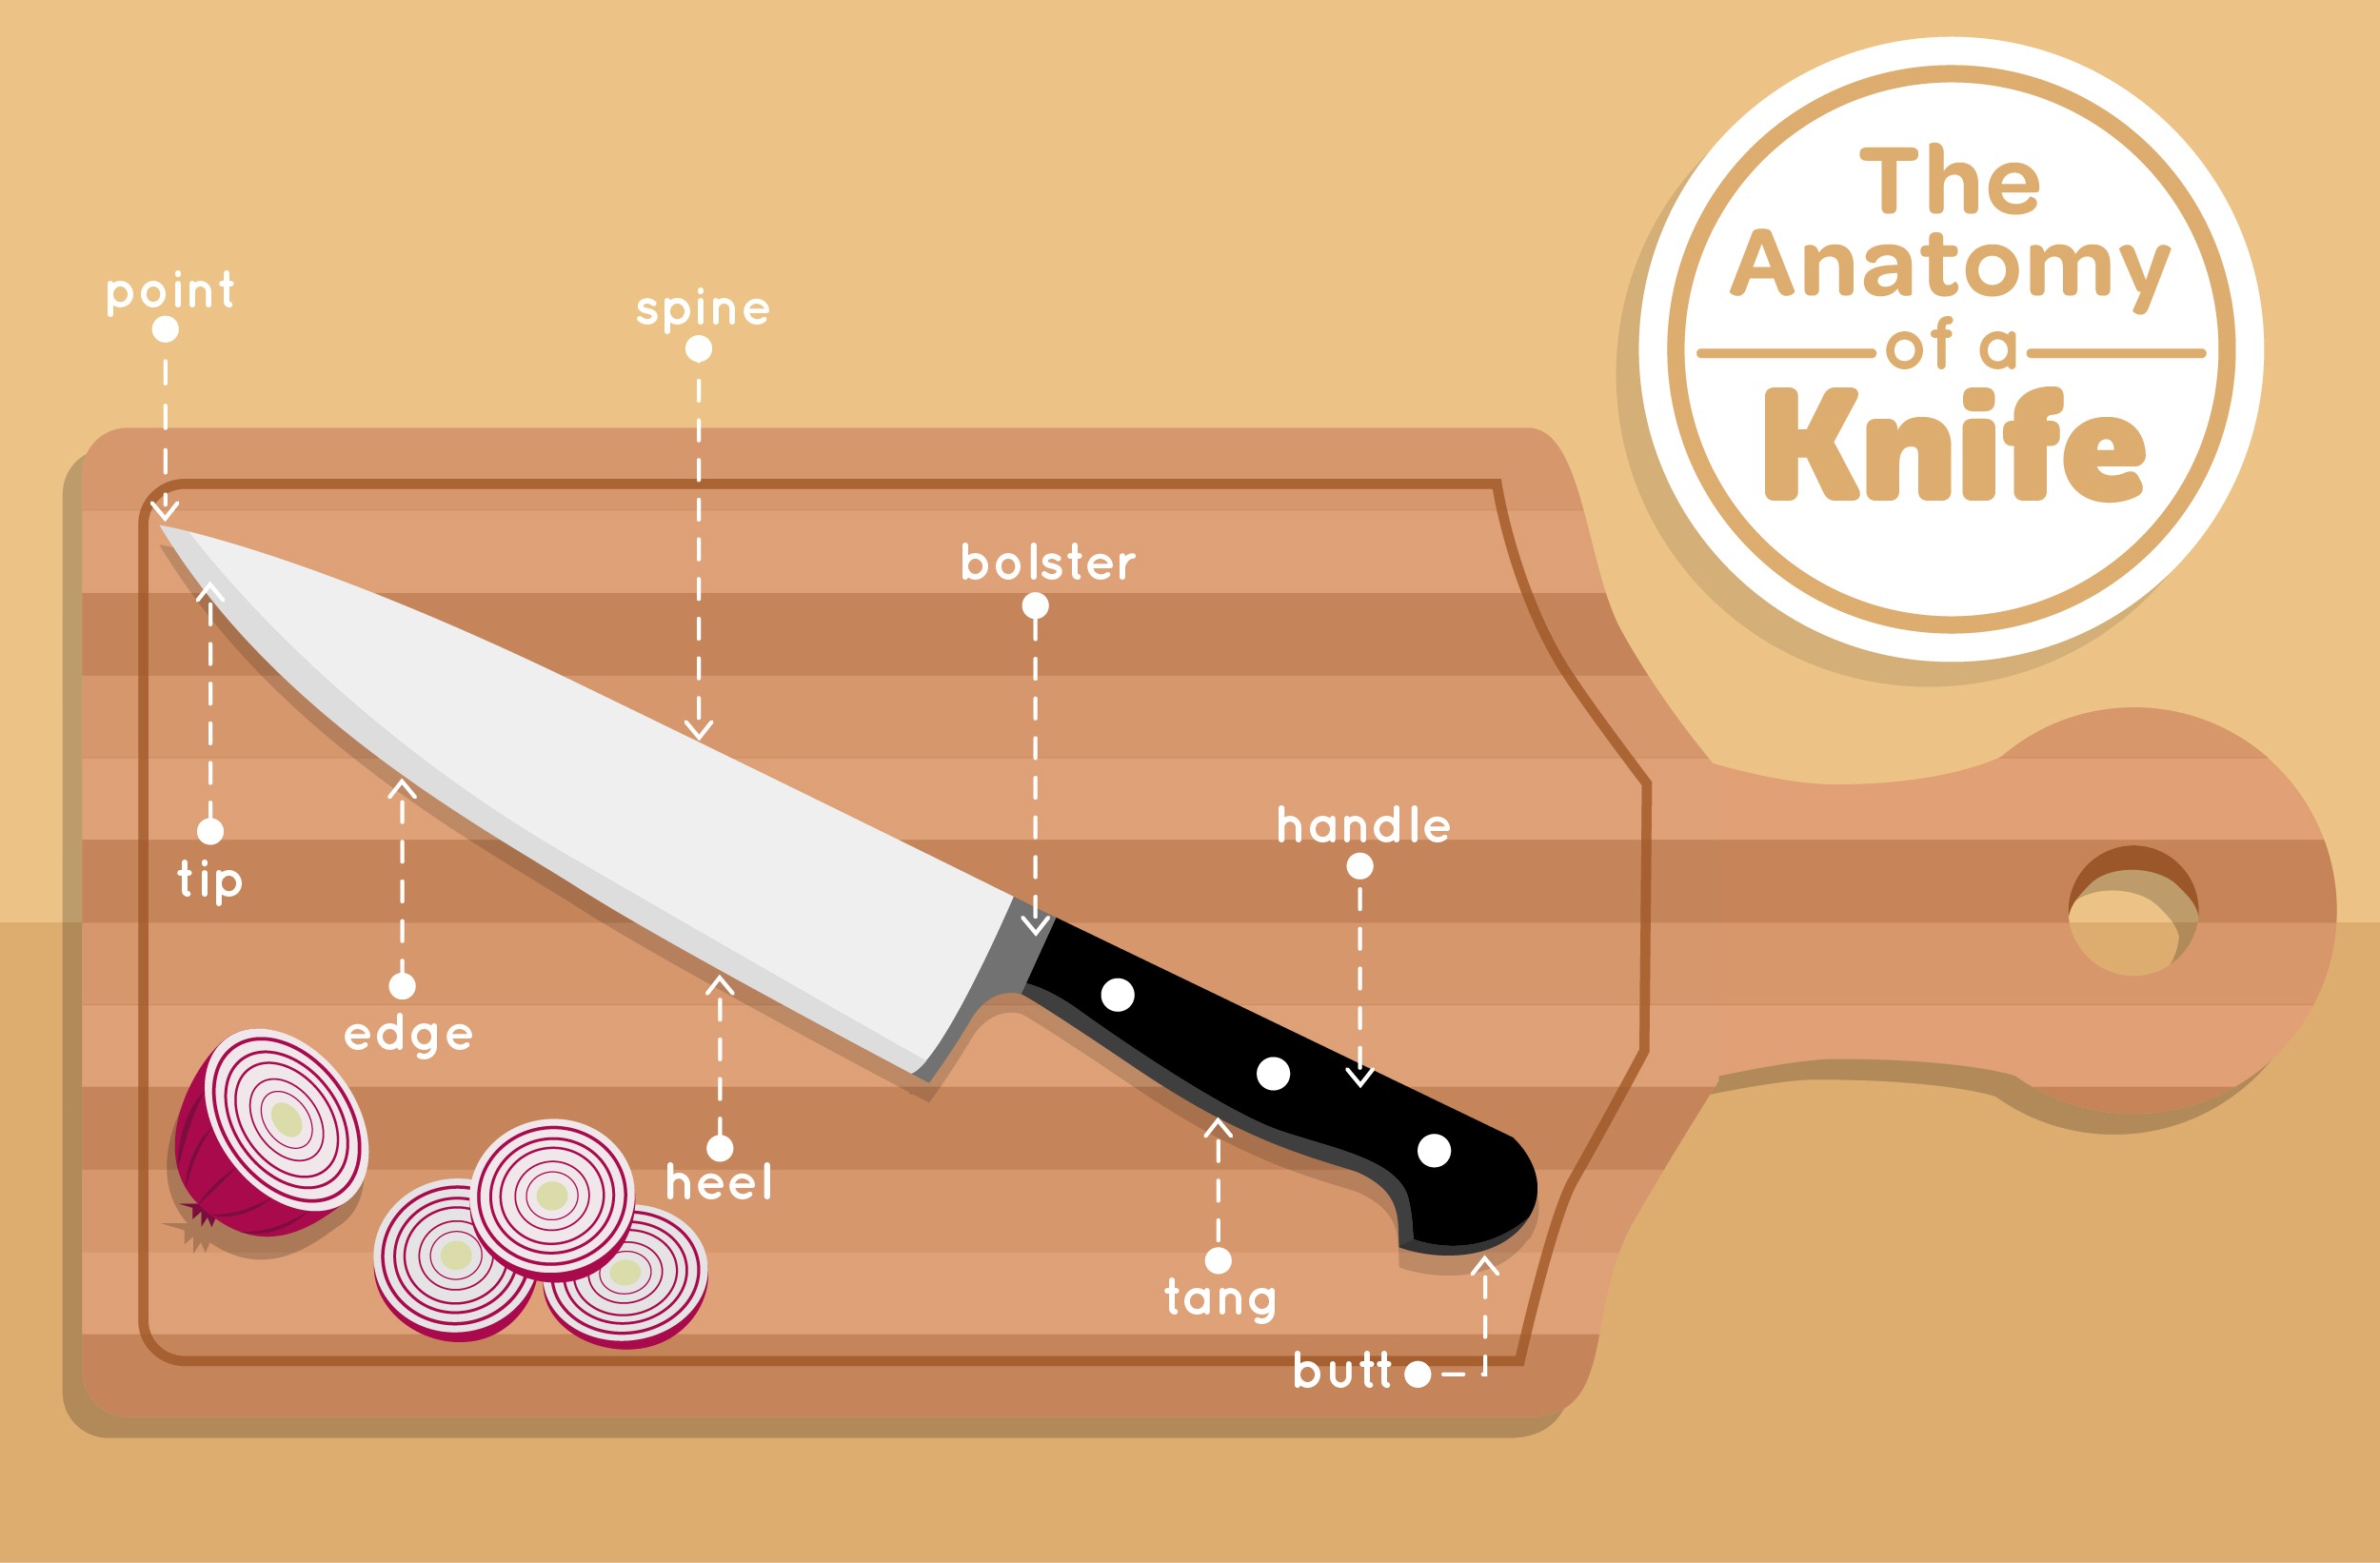 https://images.yummy.ph/yummy/uploads/2016/05/knife-parts-infographic-1.jpg